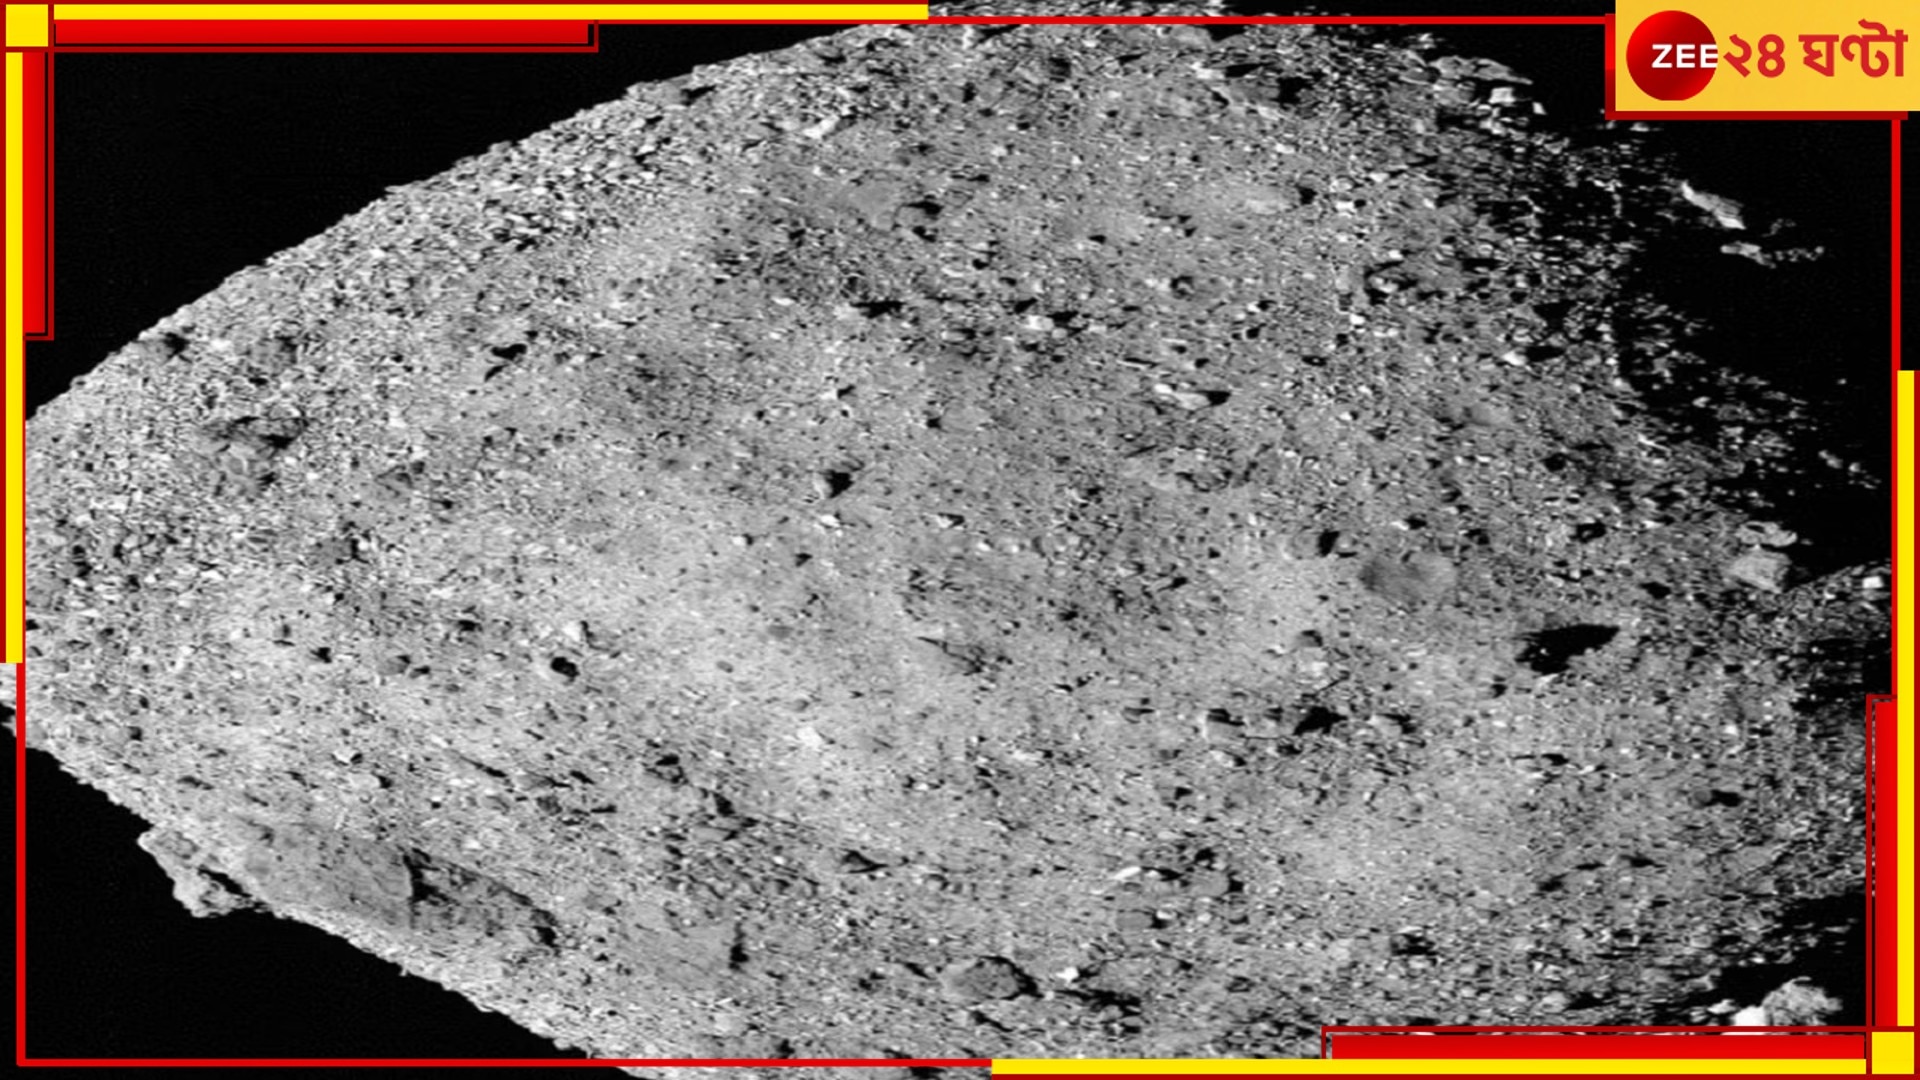 Bennu Asteroid: বিপুল গতিতে ধেয়ে আসছে গ্রহাণু, ভয়ংকর পরিণতি হতে পারে পৃথিবীর! 